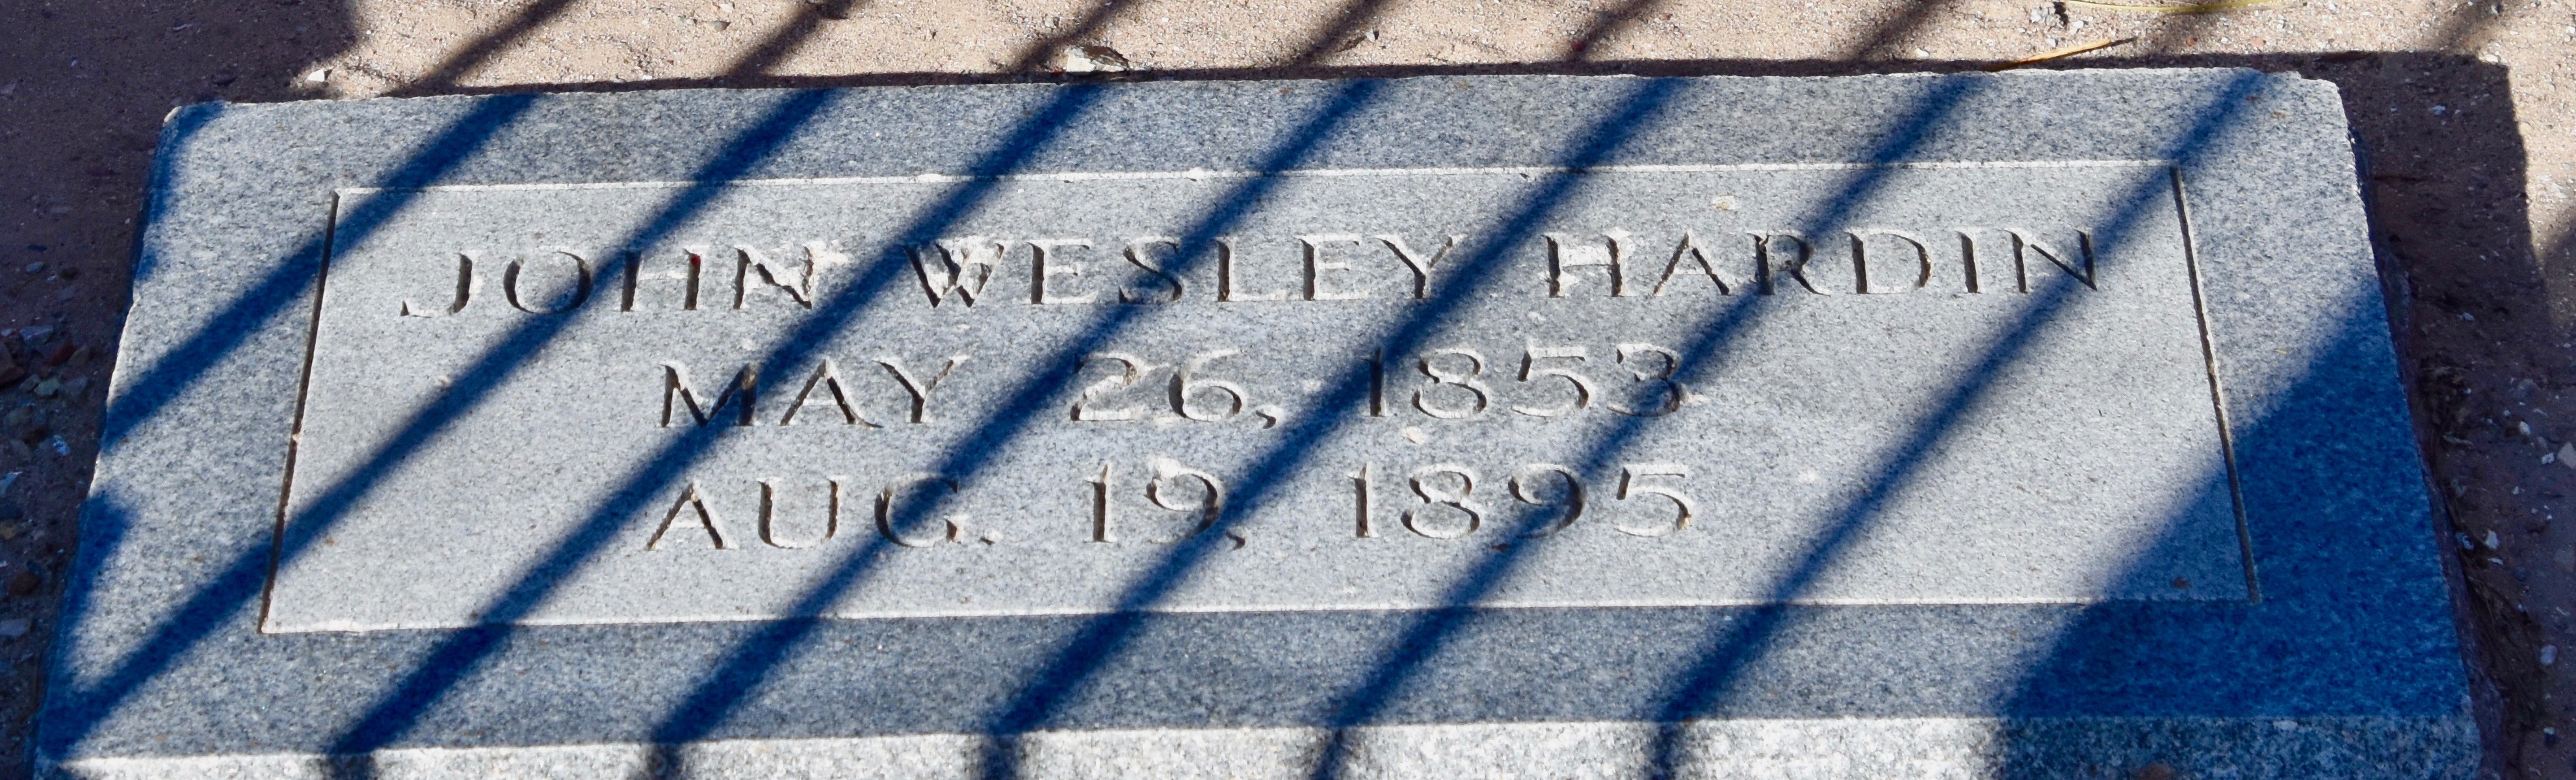 Grave of John Wesley Hardin, El Paso